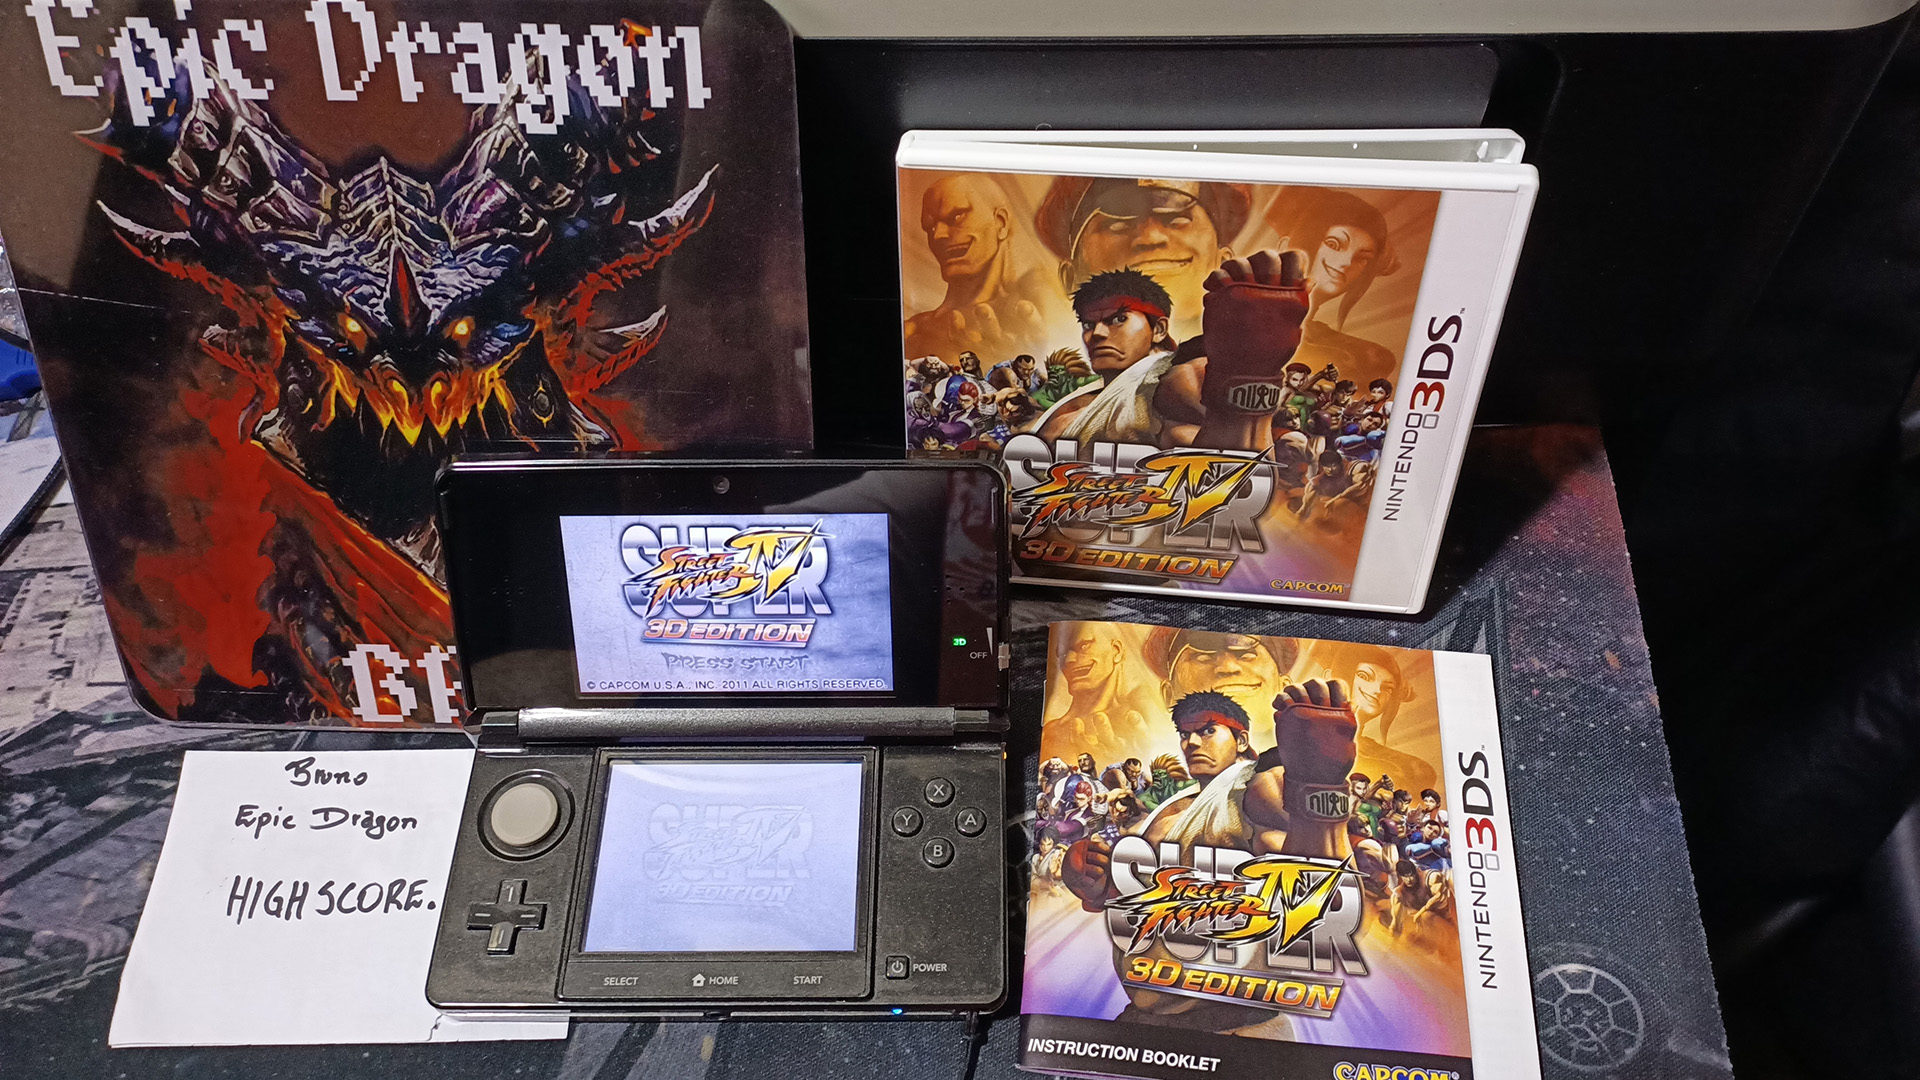 EpicDragon: Super Street Fighter IV 3D Edition: Arcade: Sagat (Nintendo 3DS) 665,800 points on 2022-08-17 21:12:28